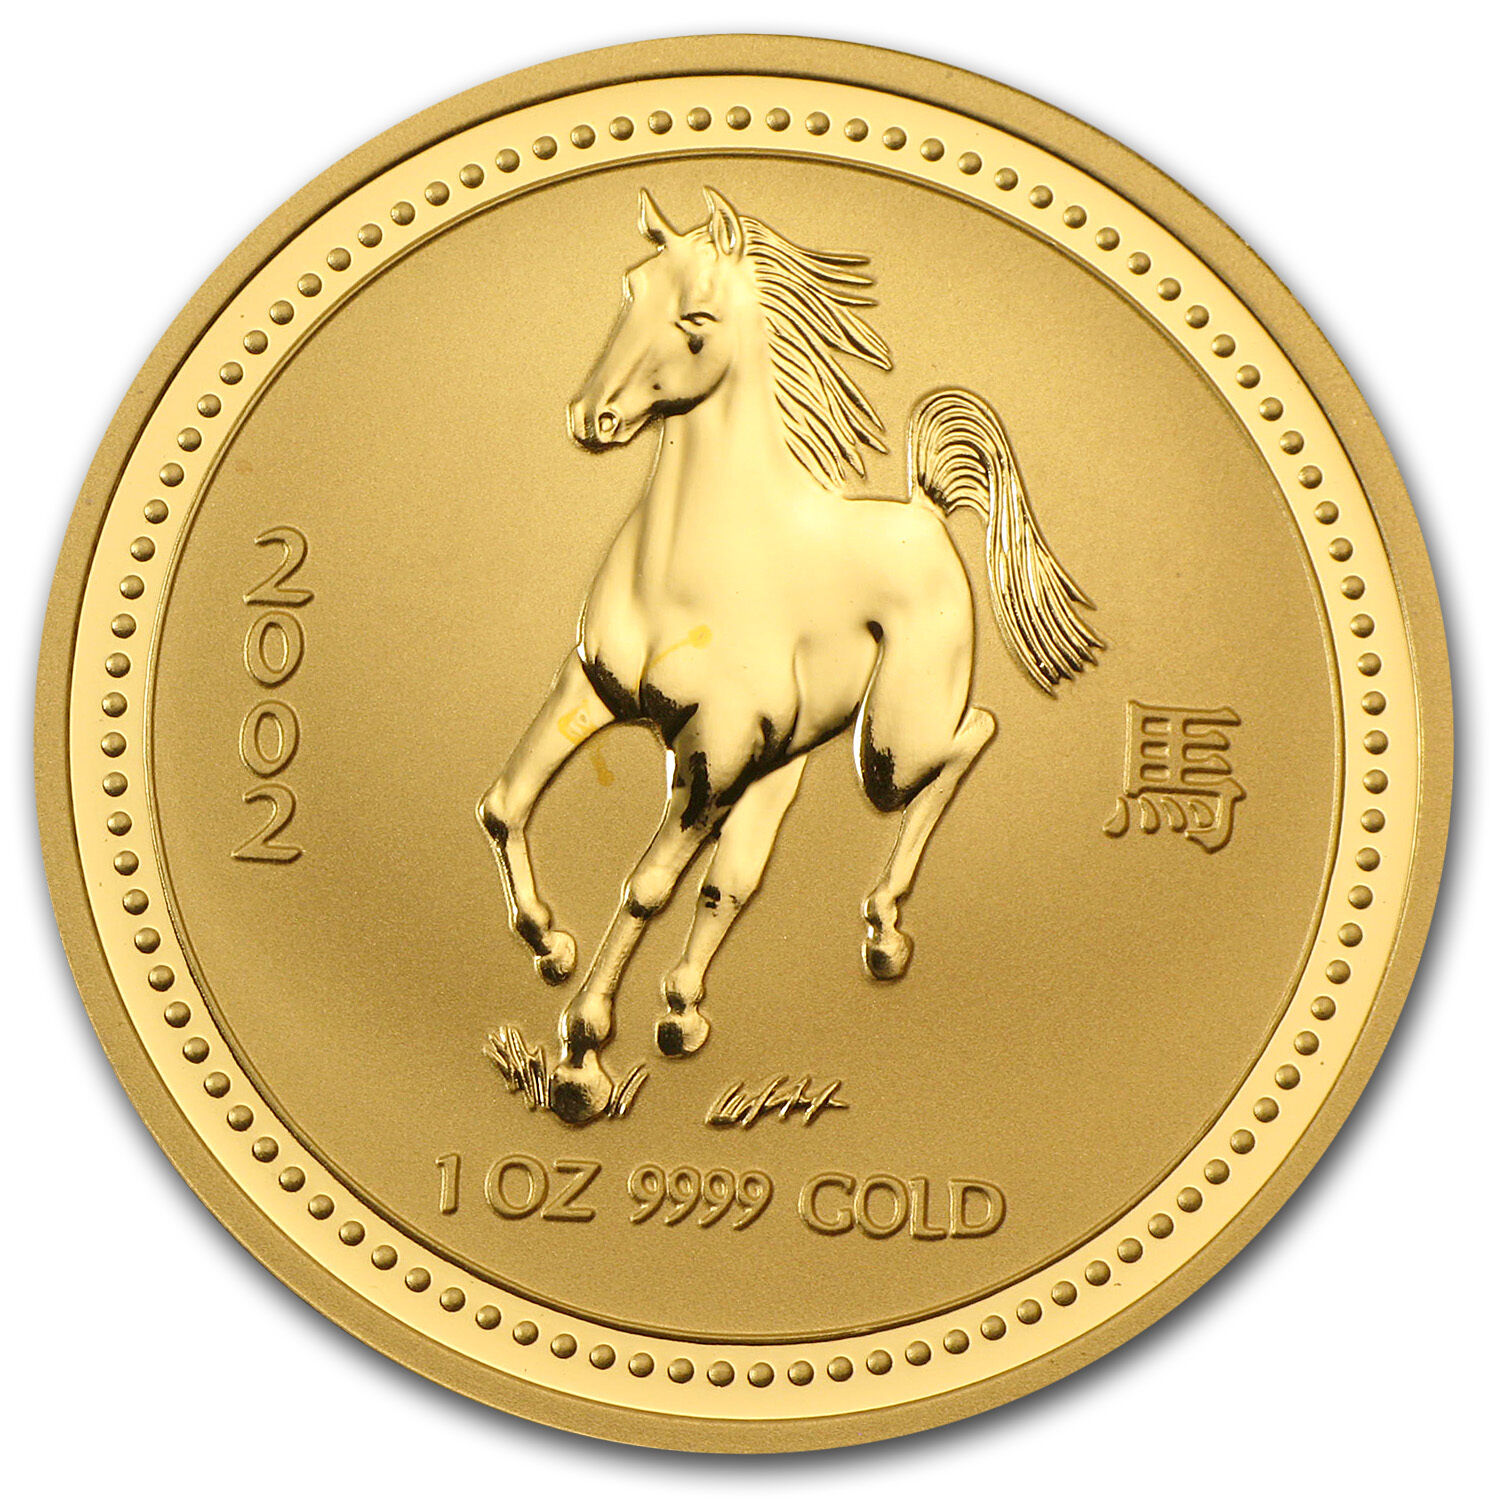 2002 1 oz Gold Australian Perth Mint Lunar Year of the Horse Coin - SKU #8981